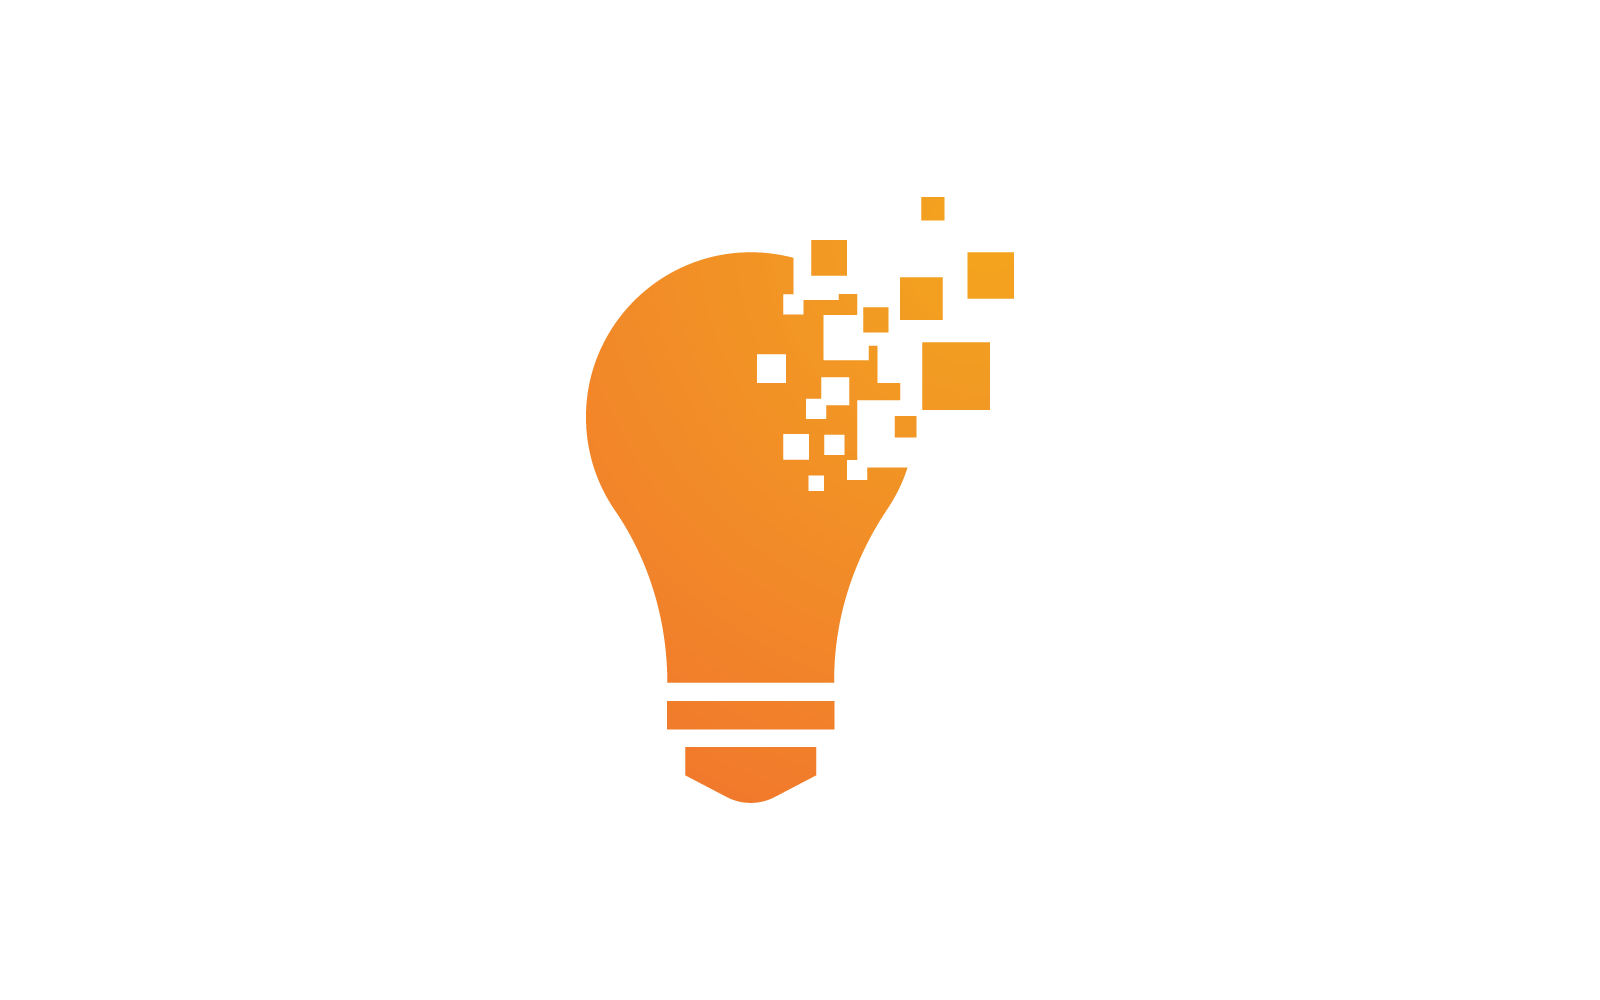 Pixel art Bulb technology ilustration logo vector design